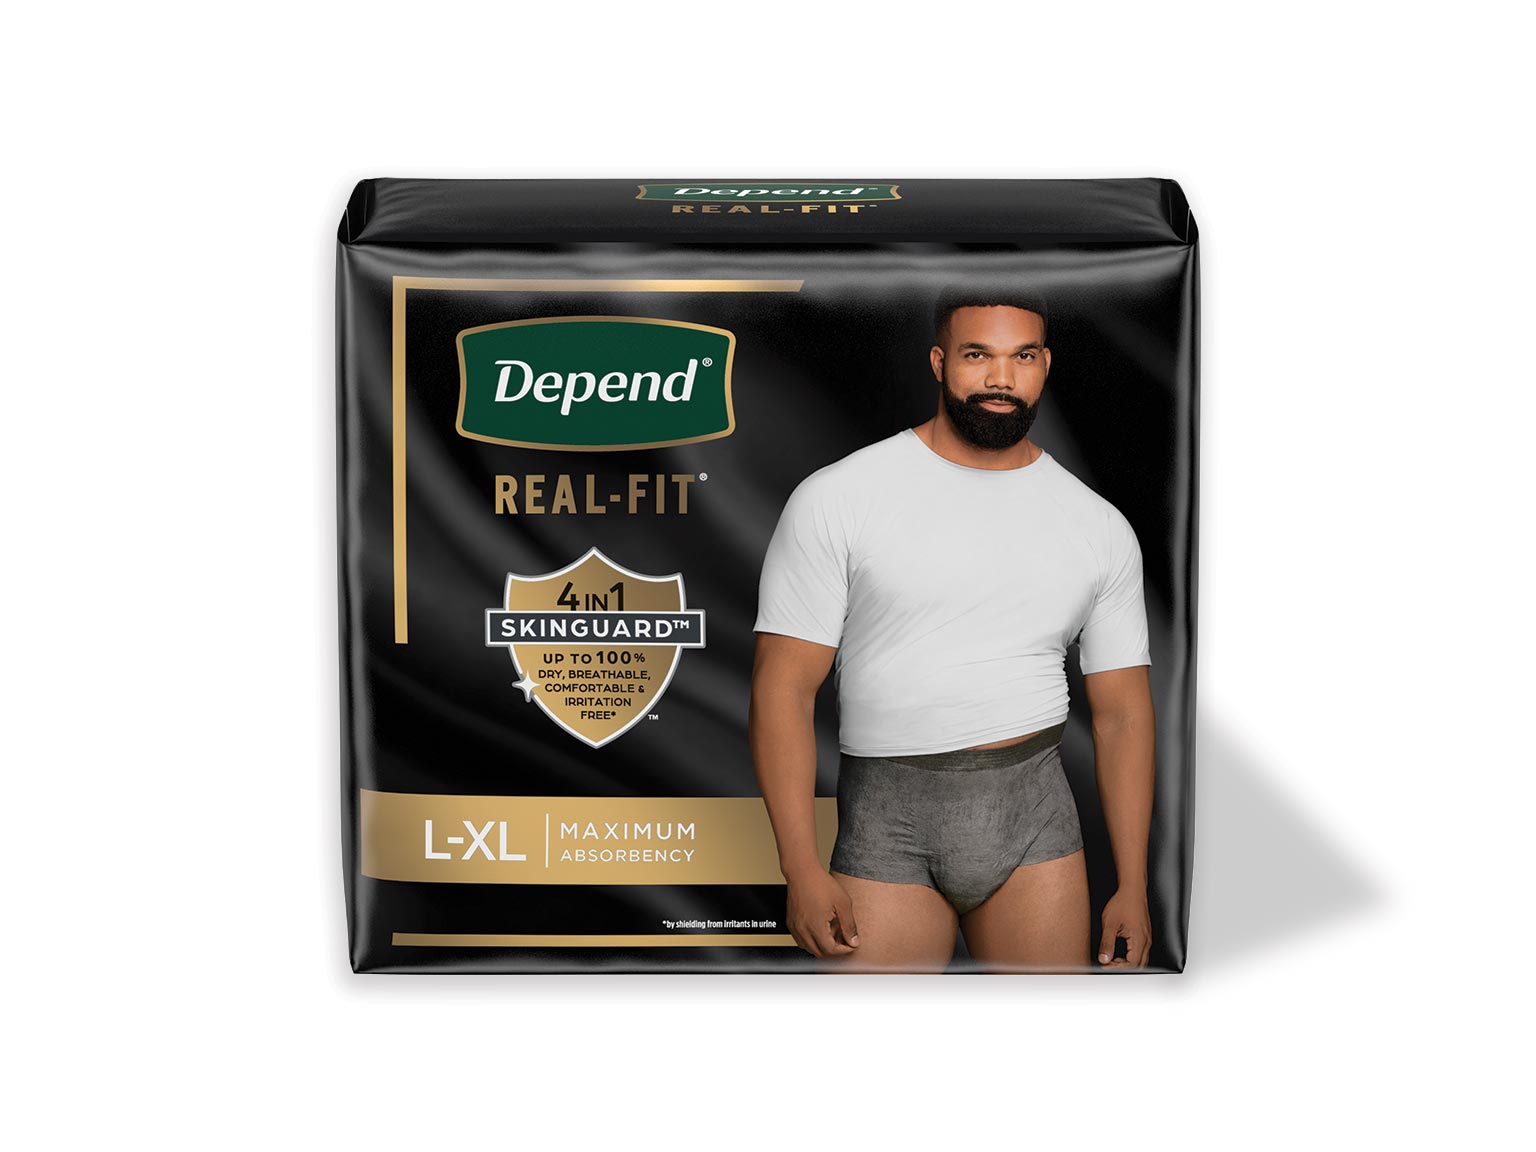 Soft linen underwear men For Comfort 